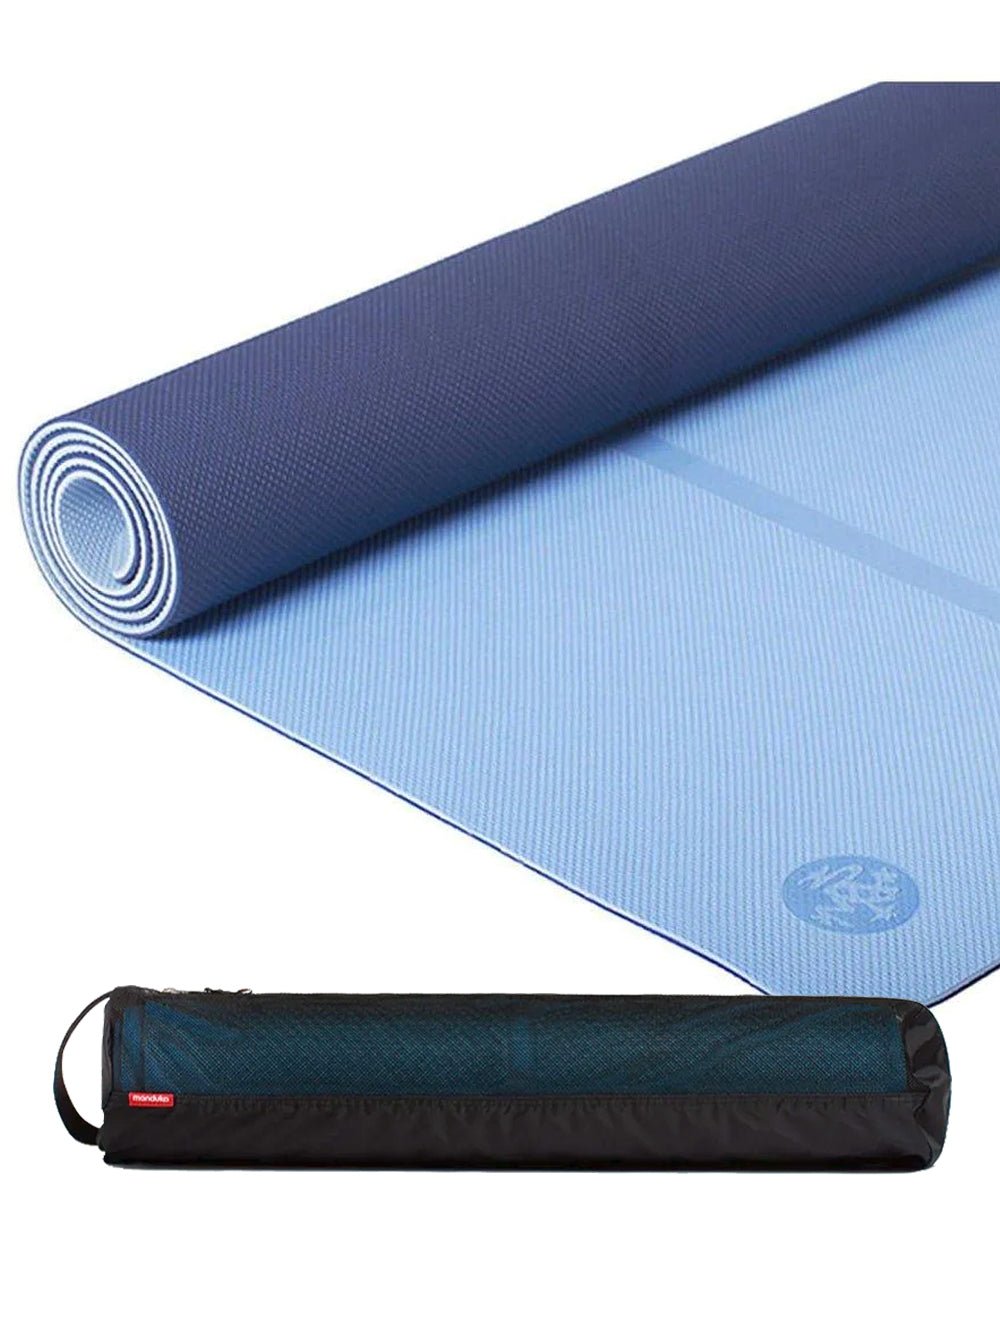 Manduka] [Yoga starter 2-piece set] / Begin Begin yoga mat (5mm) /  Lightweight Begin Yoga Mat Manduka TPE thick commuter mat sling *Wrapping  not possible [SALE] - Puravida! Pravida Yoga Fitness Shop –